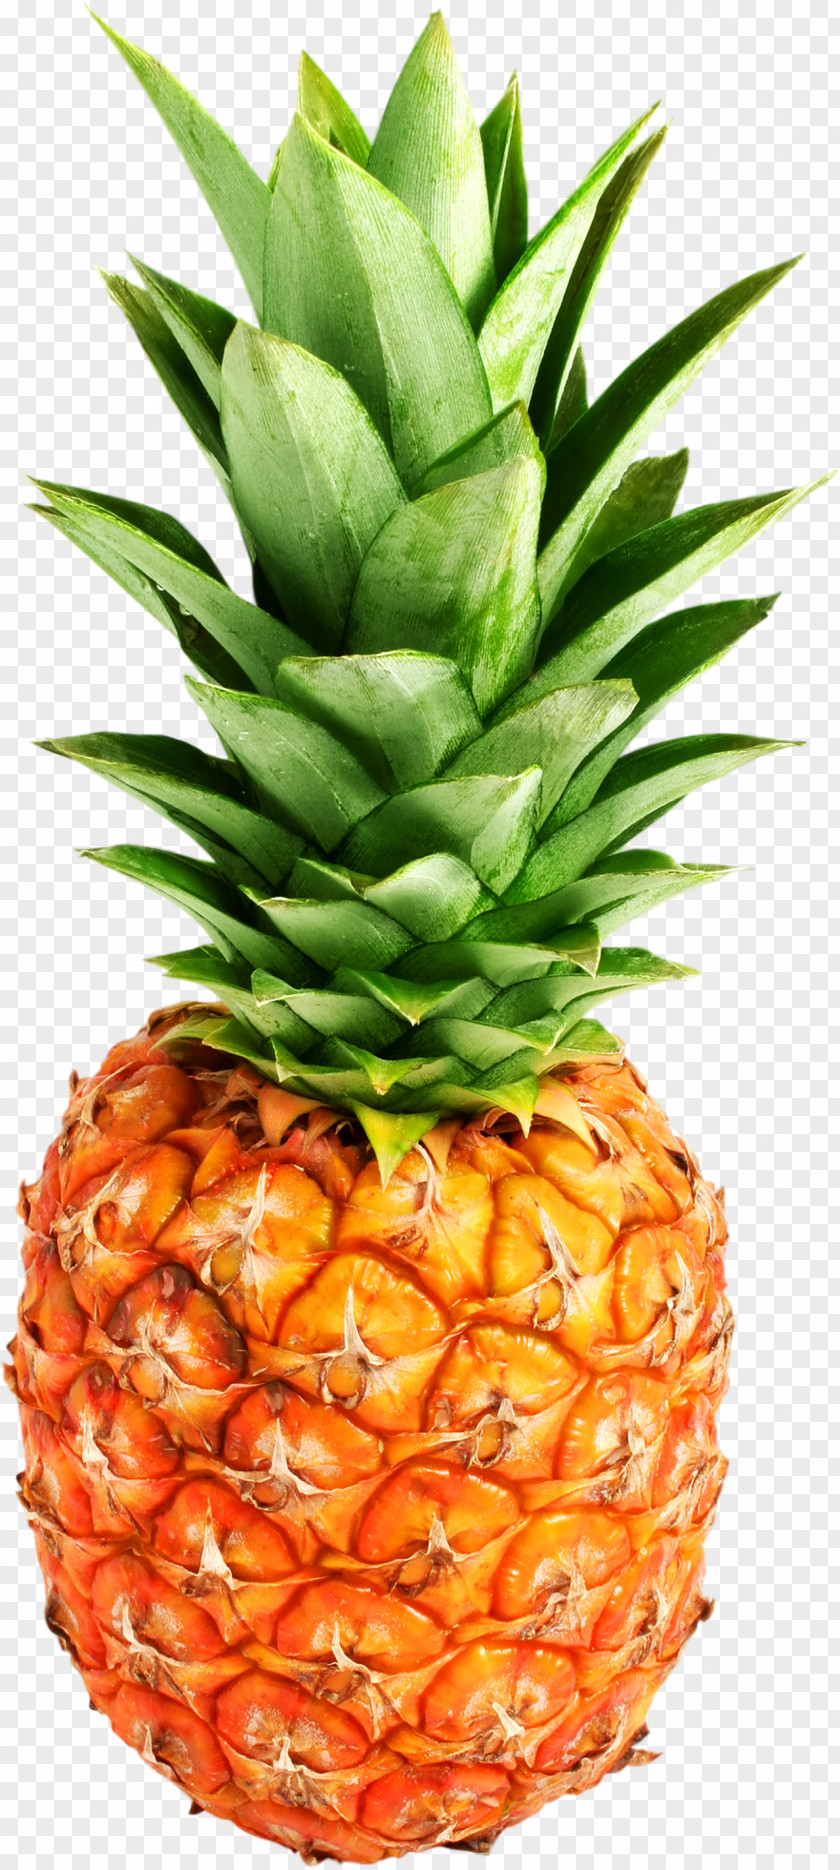 Pineapple Image, Free Download Juice Clip Art PNG